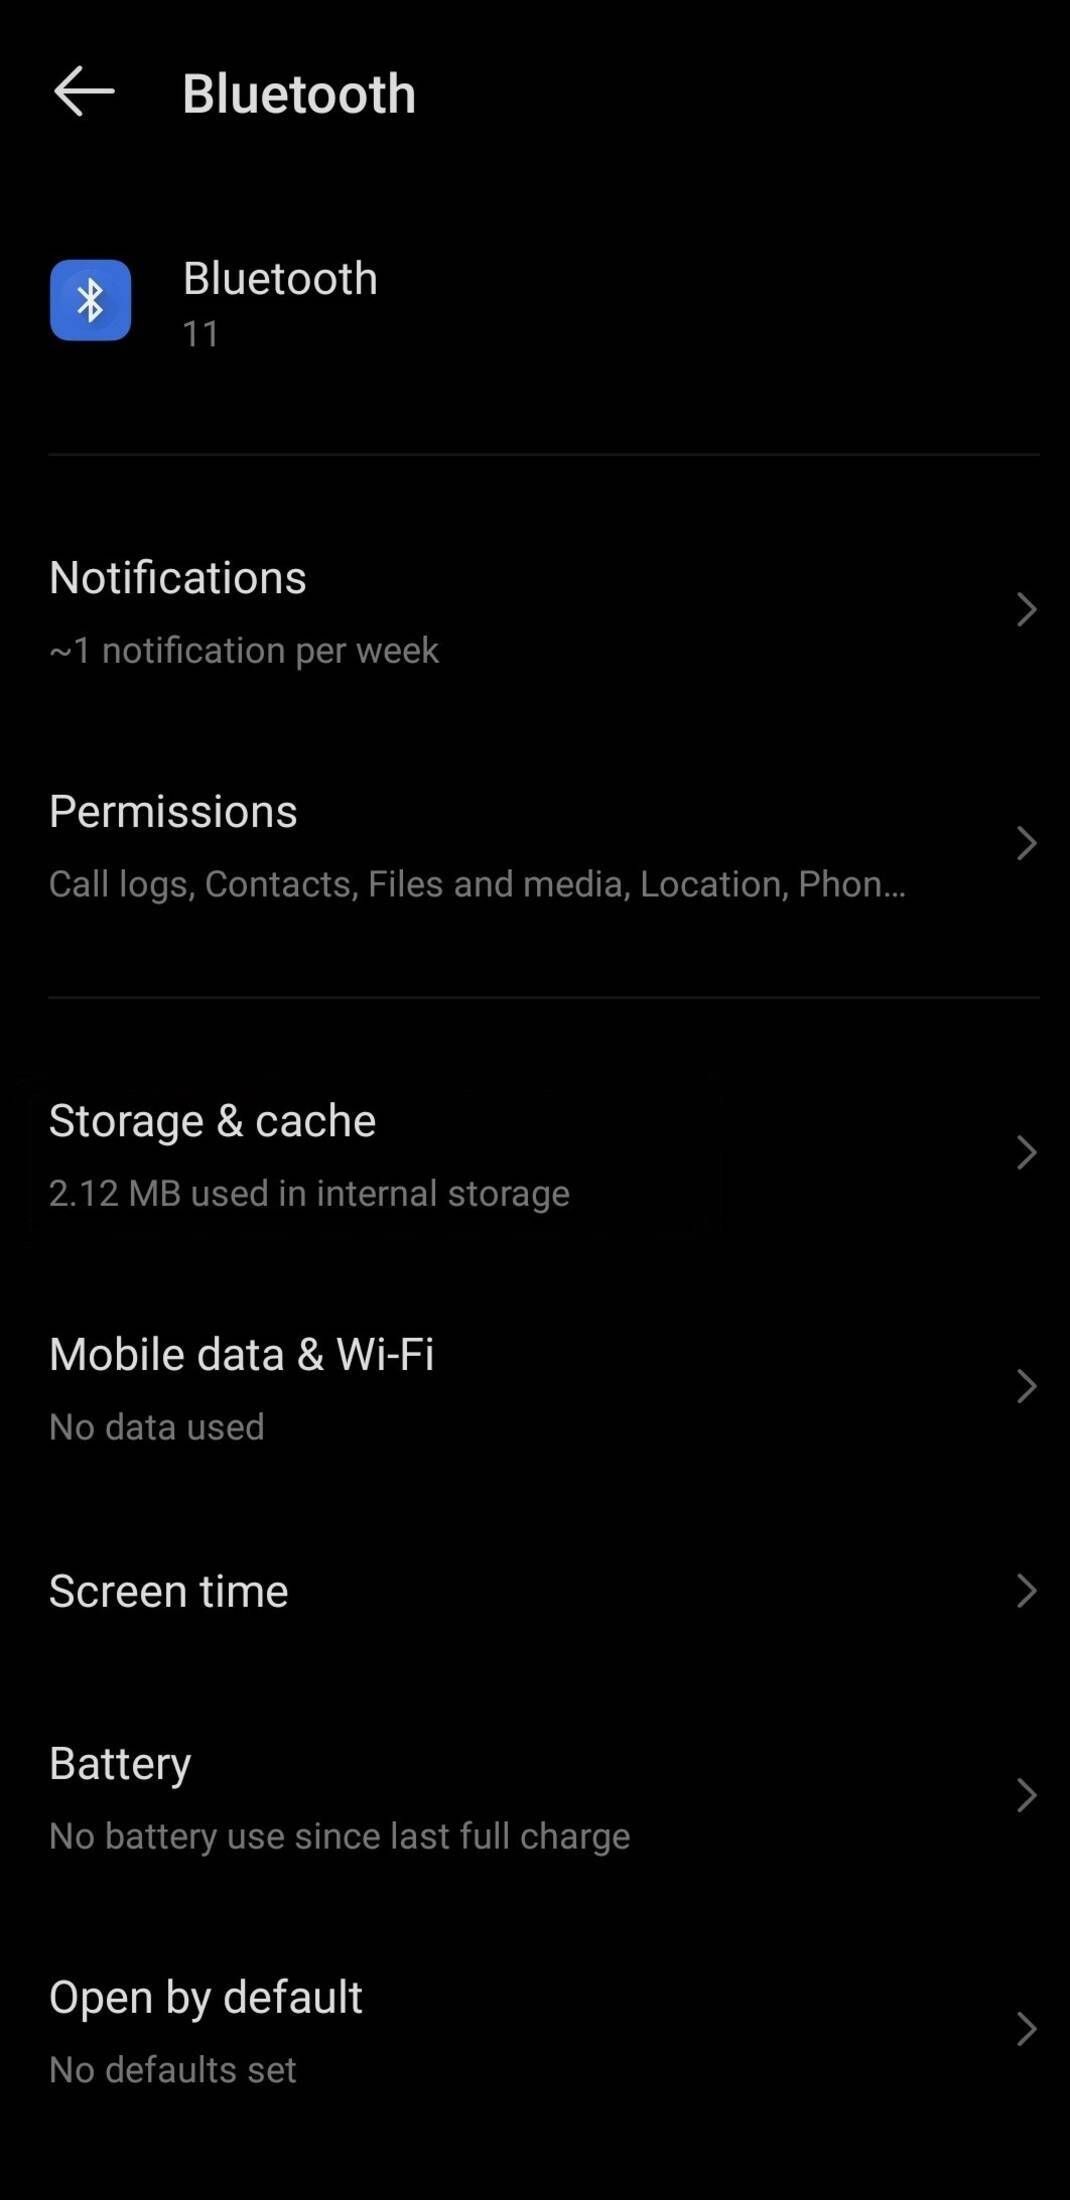 Bluetooth menu shows Bluetooth cache and storage option